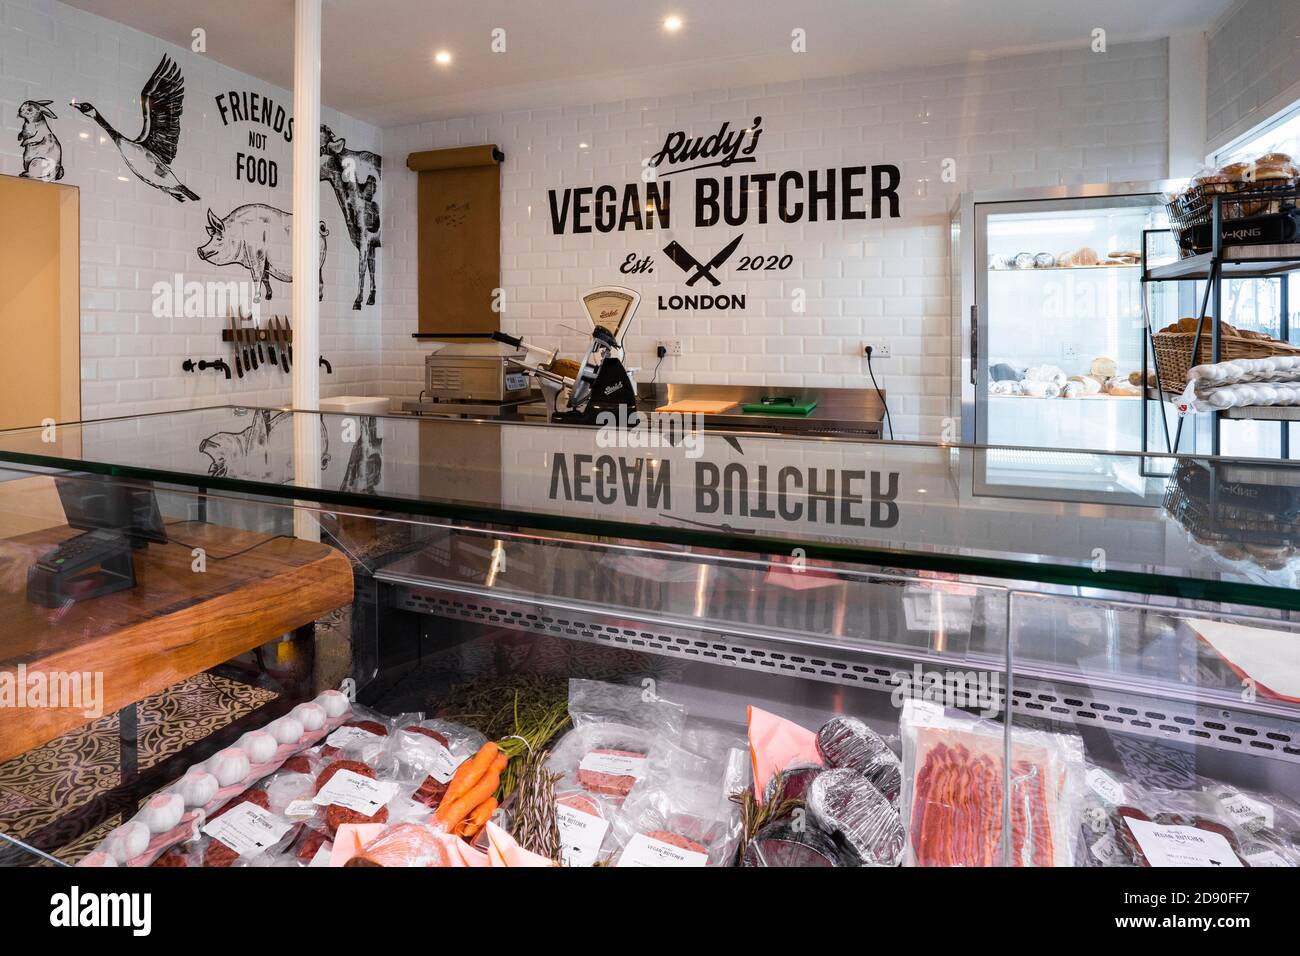 Rudys Vegan Butcher Delikatessengeschäft wird in Islington London eröffnet. Stockfoto